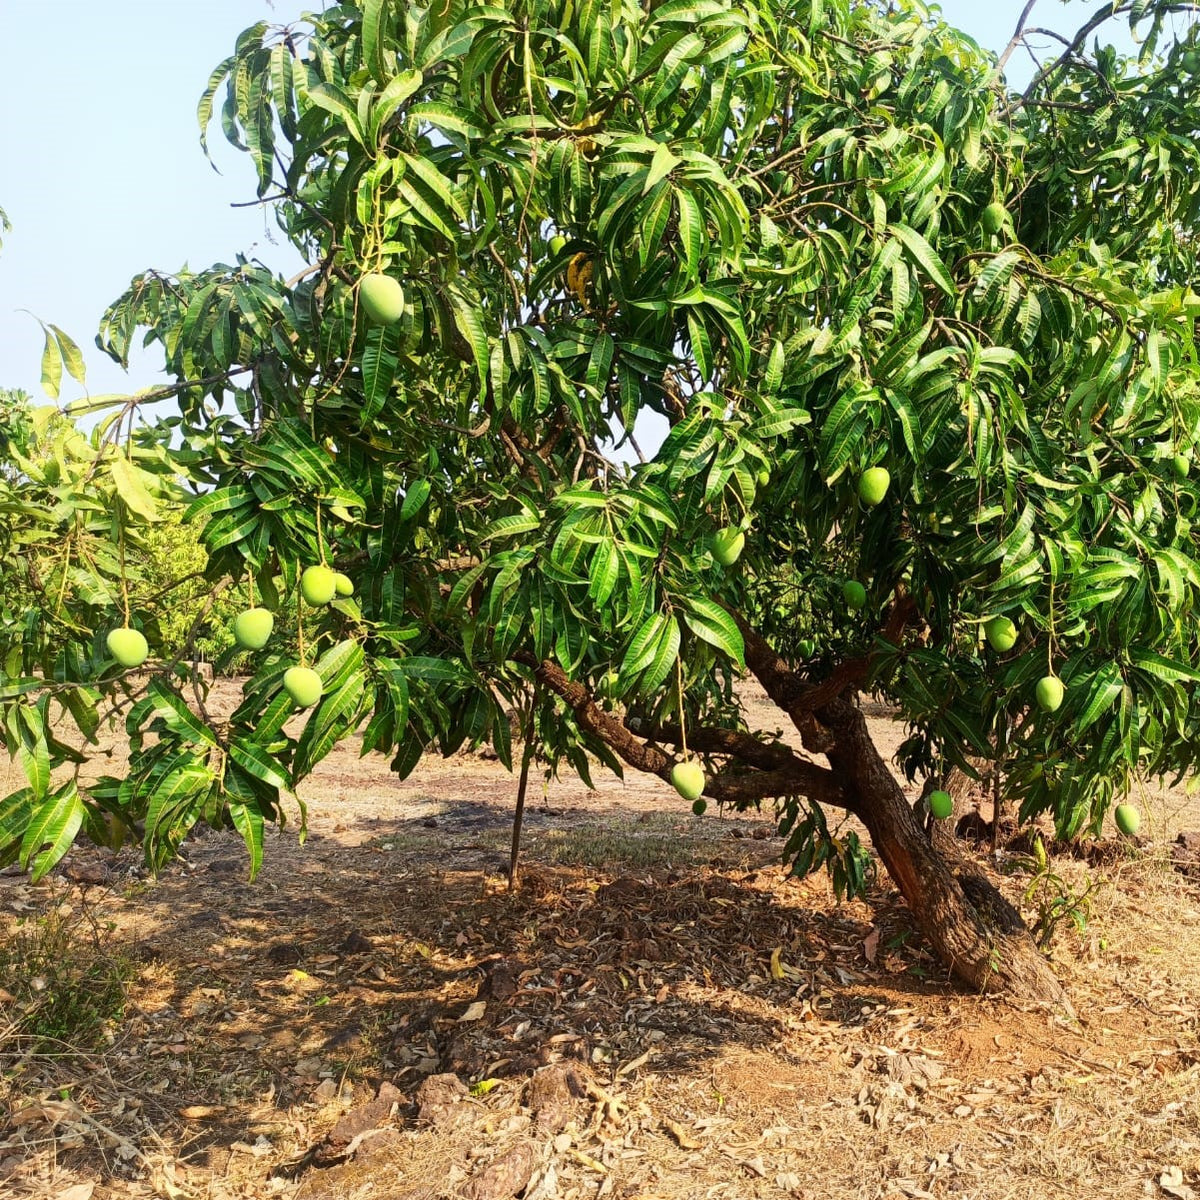 Mango Blossoms WOW! - Under the Mango TreeUnder the Mango Tree